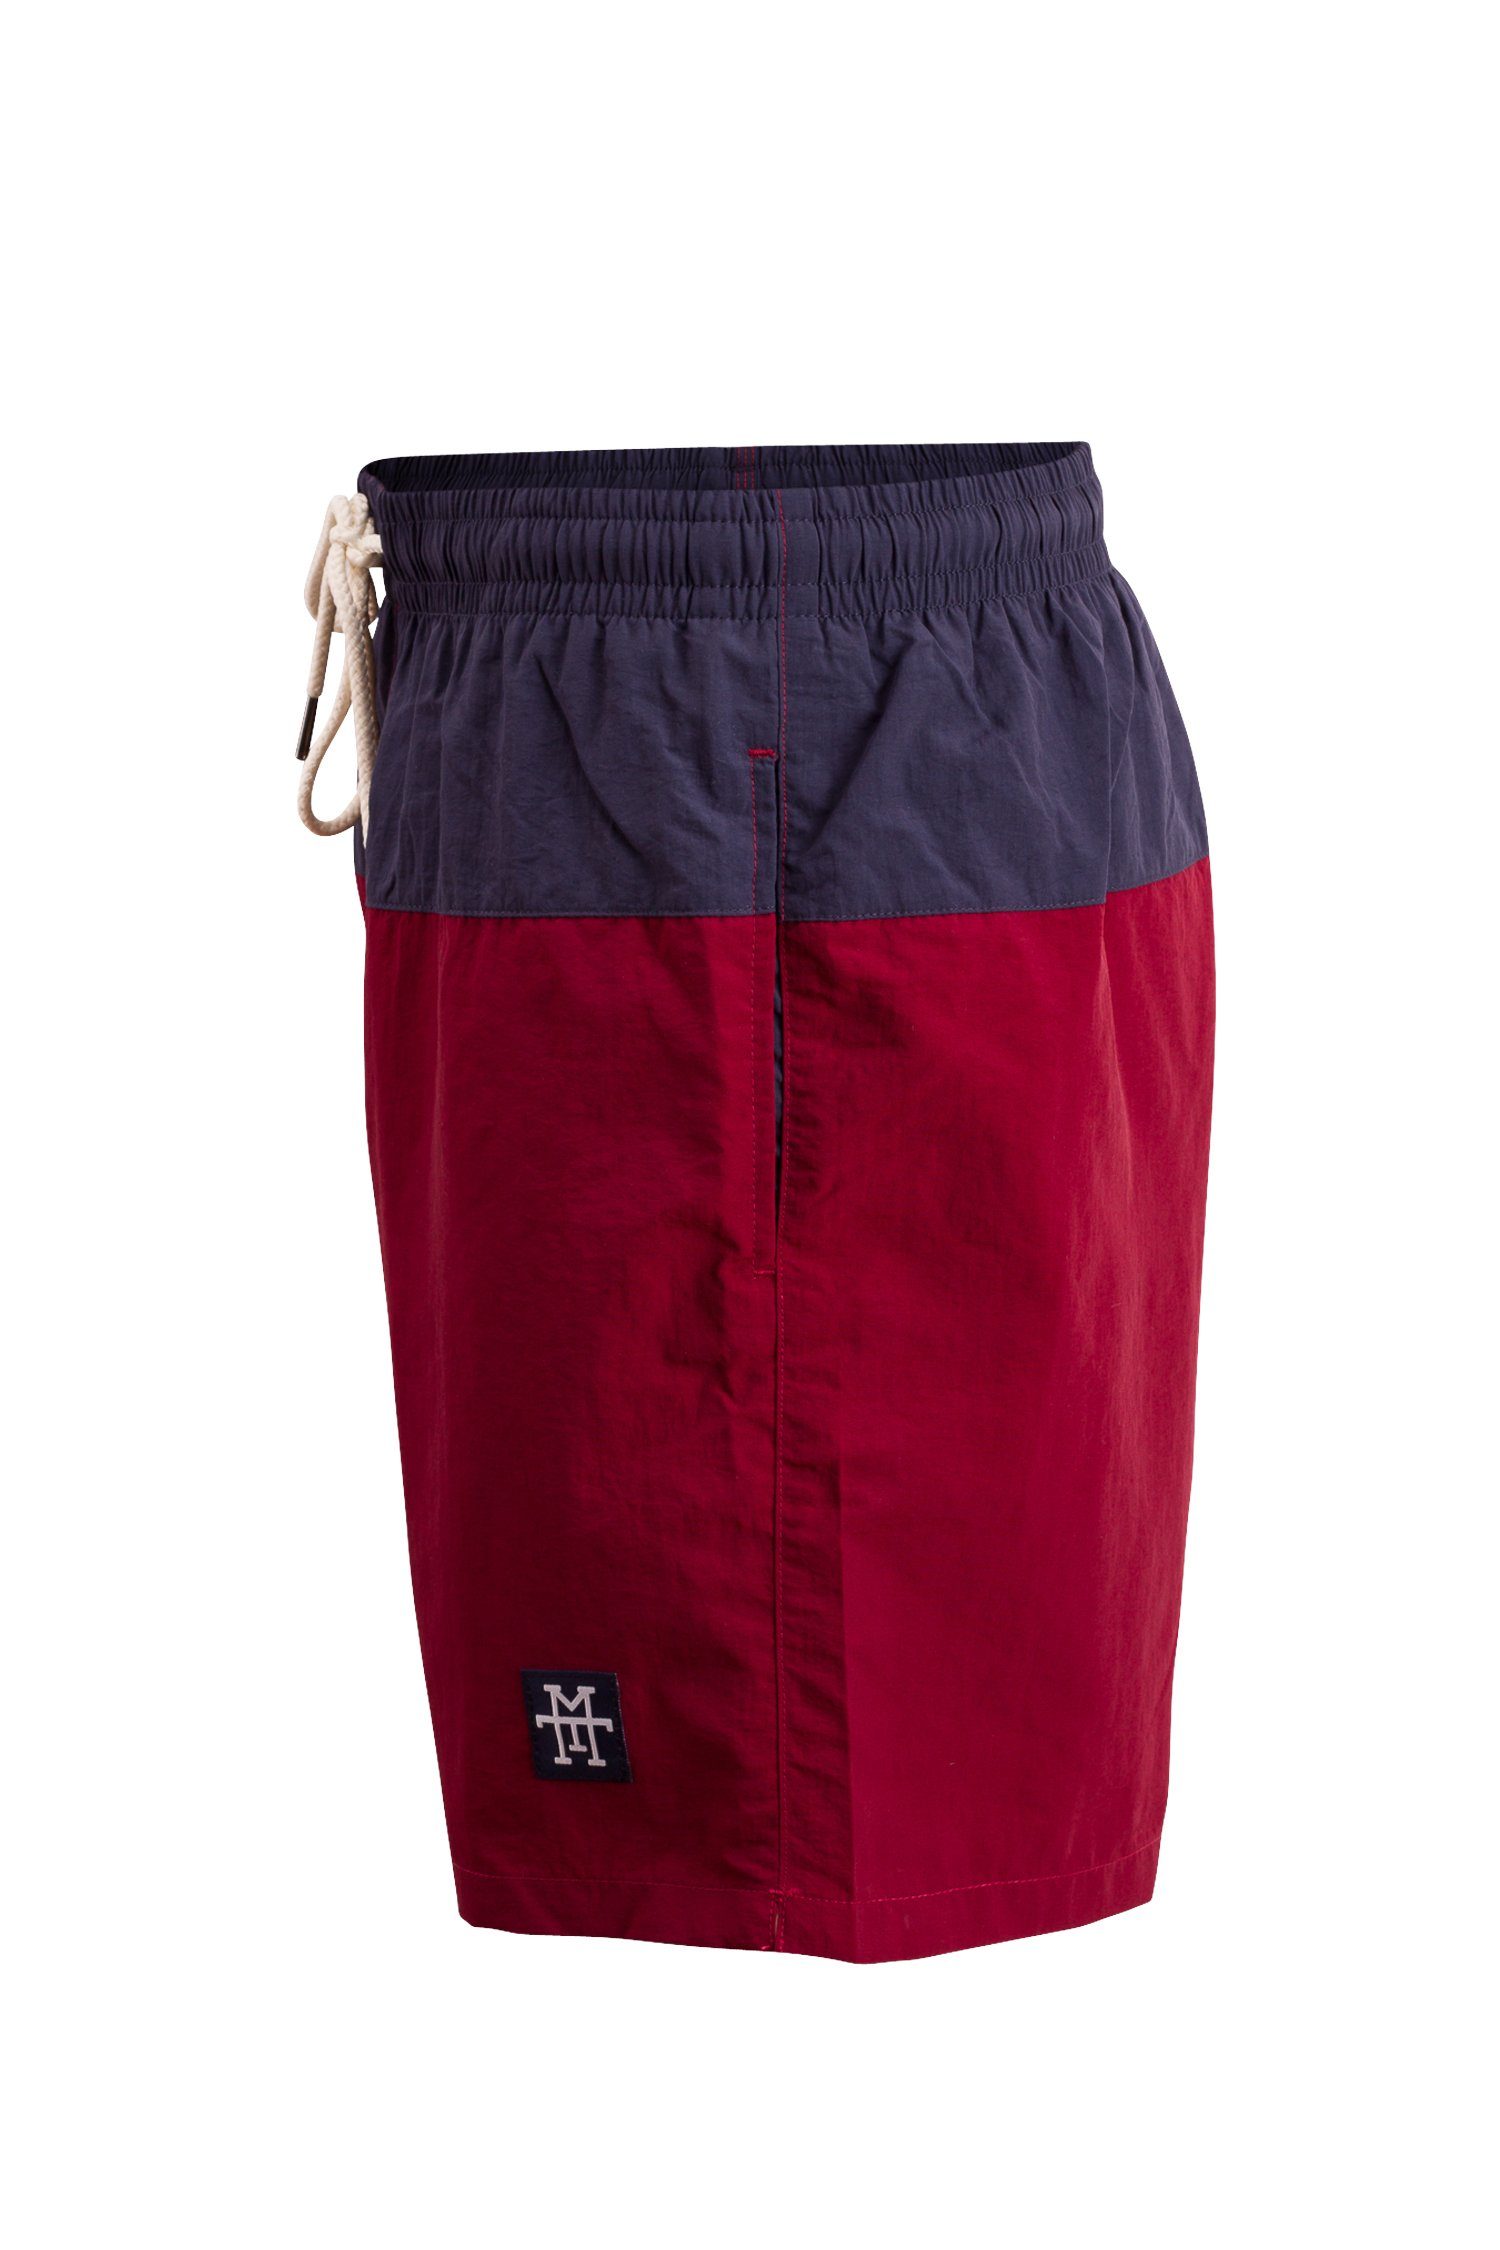 Manufaktur13 Badeshorts Swim Shorts - schnelltrocknend Badehosen Red/Navy